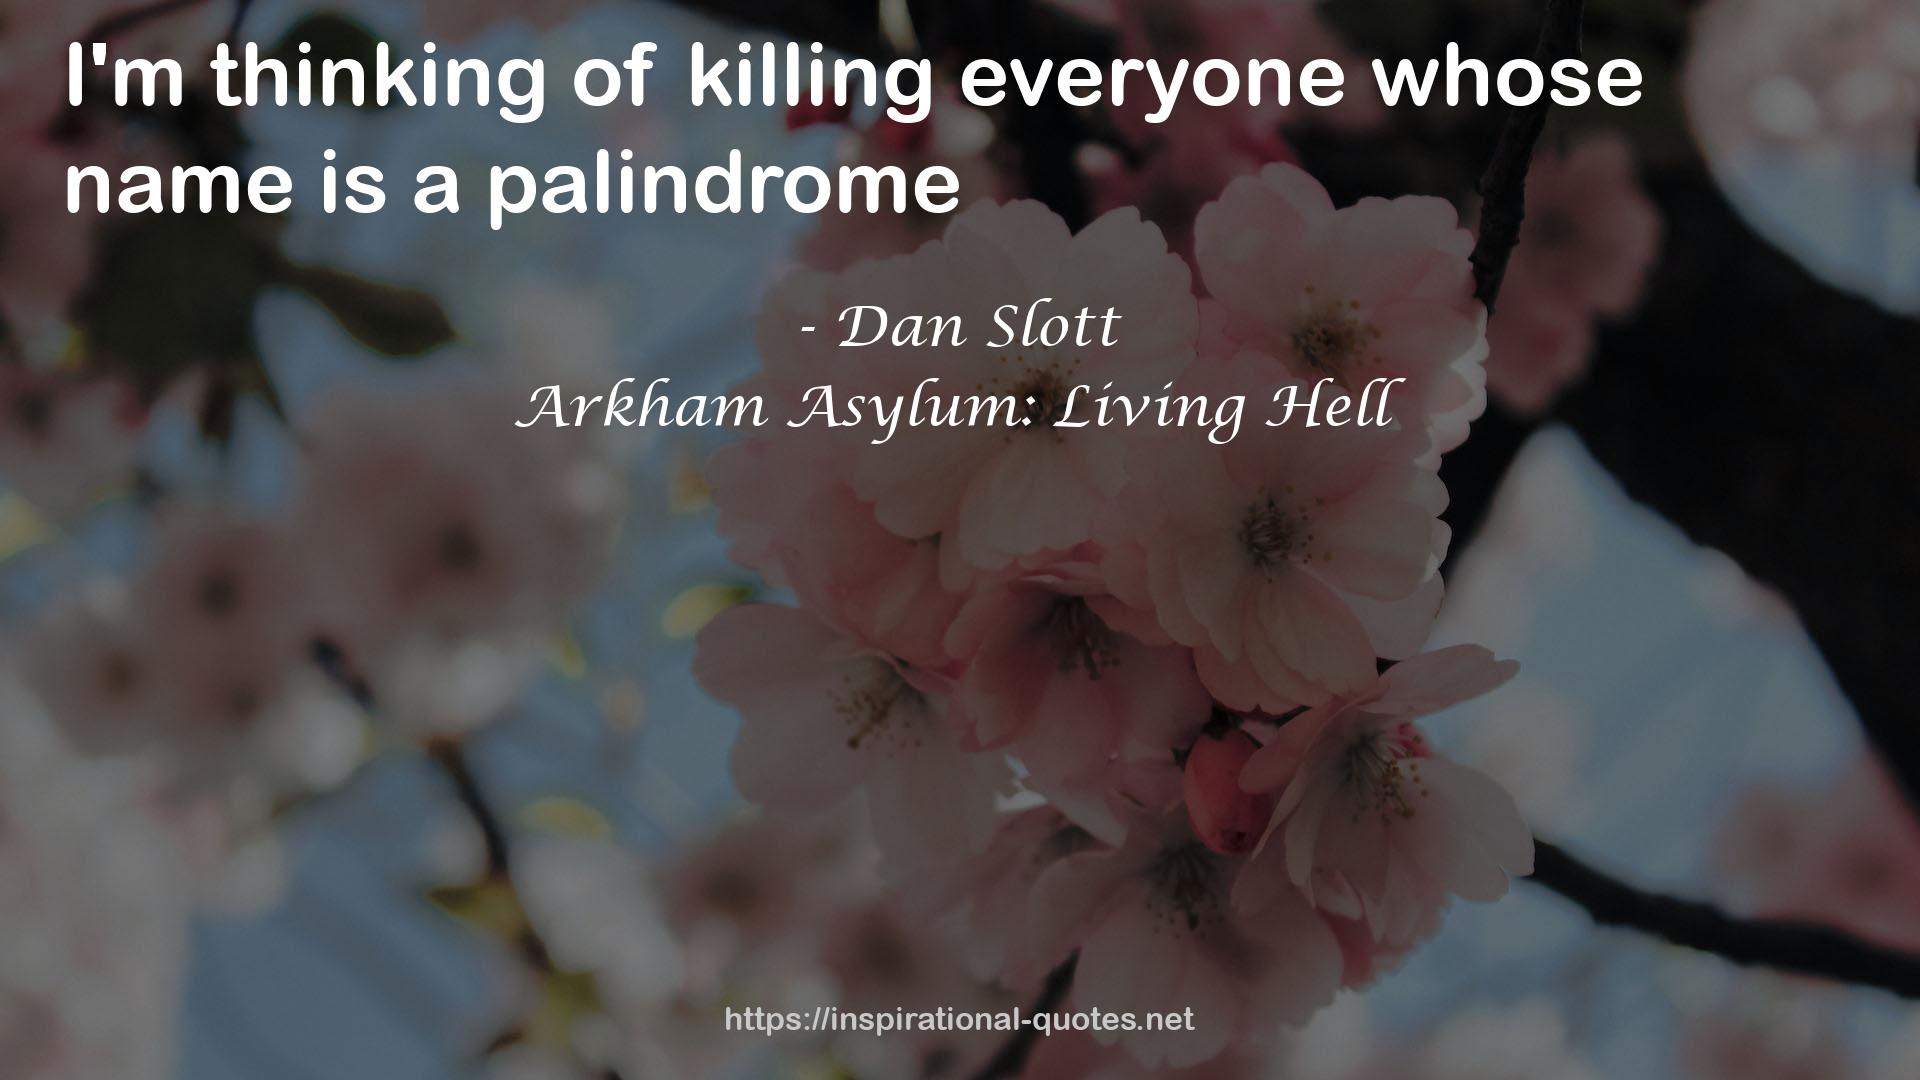 Arkham Asylum: Living Hell QUOTES